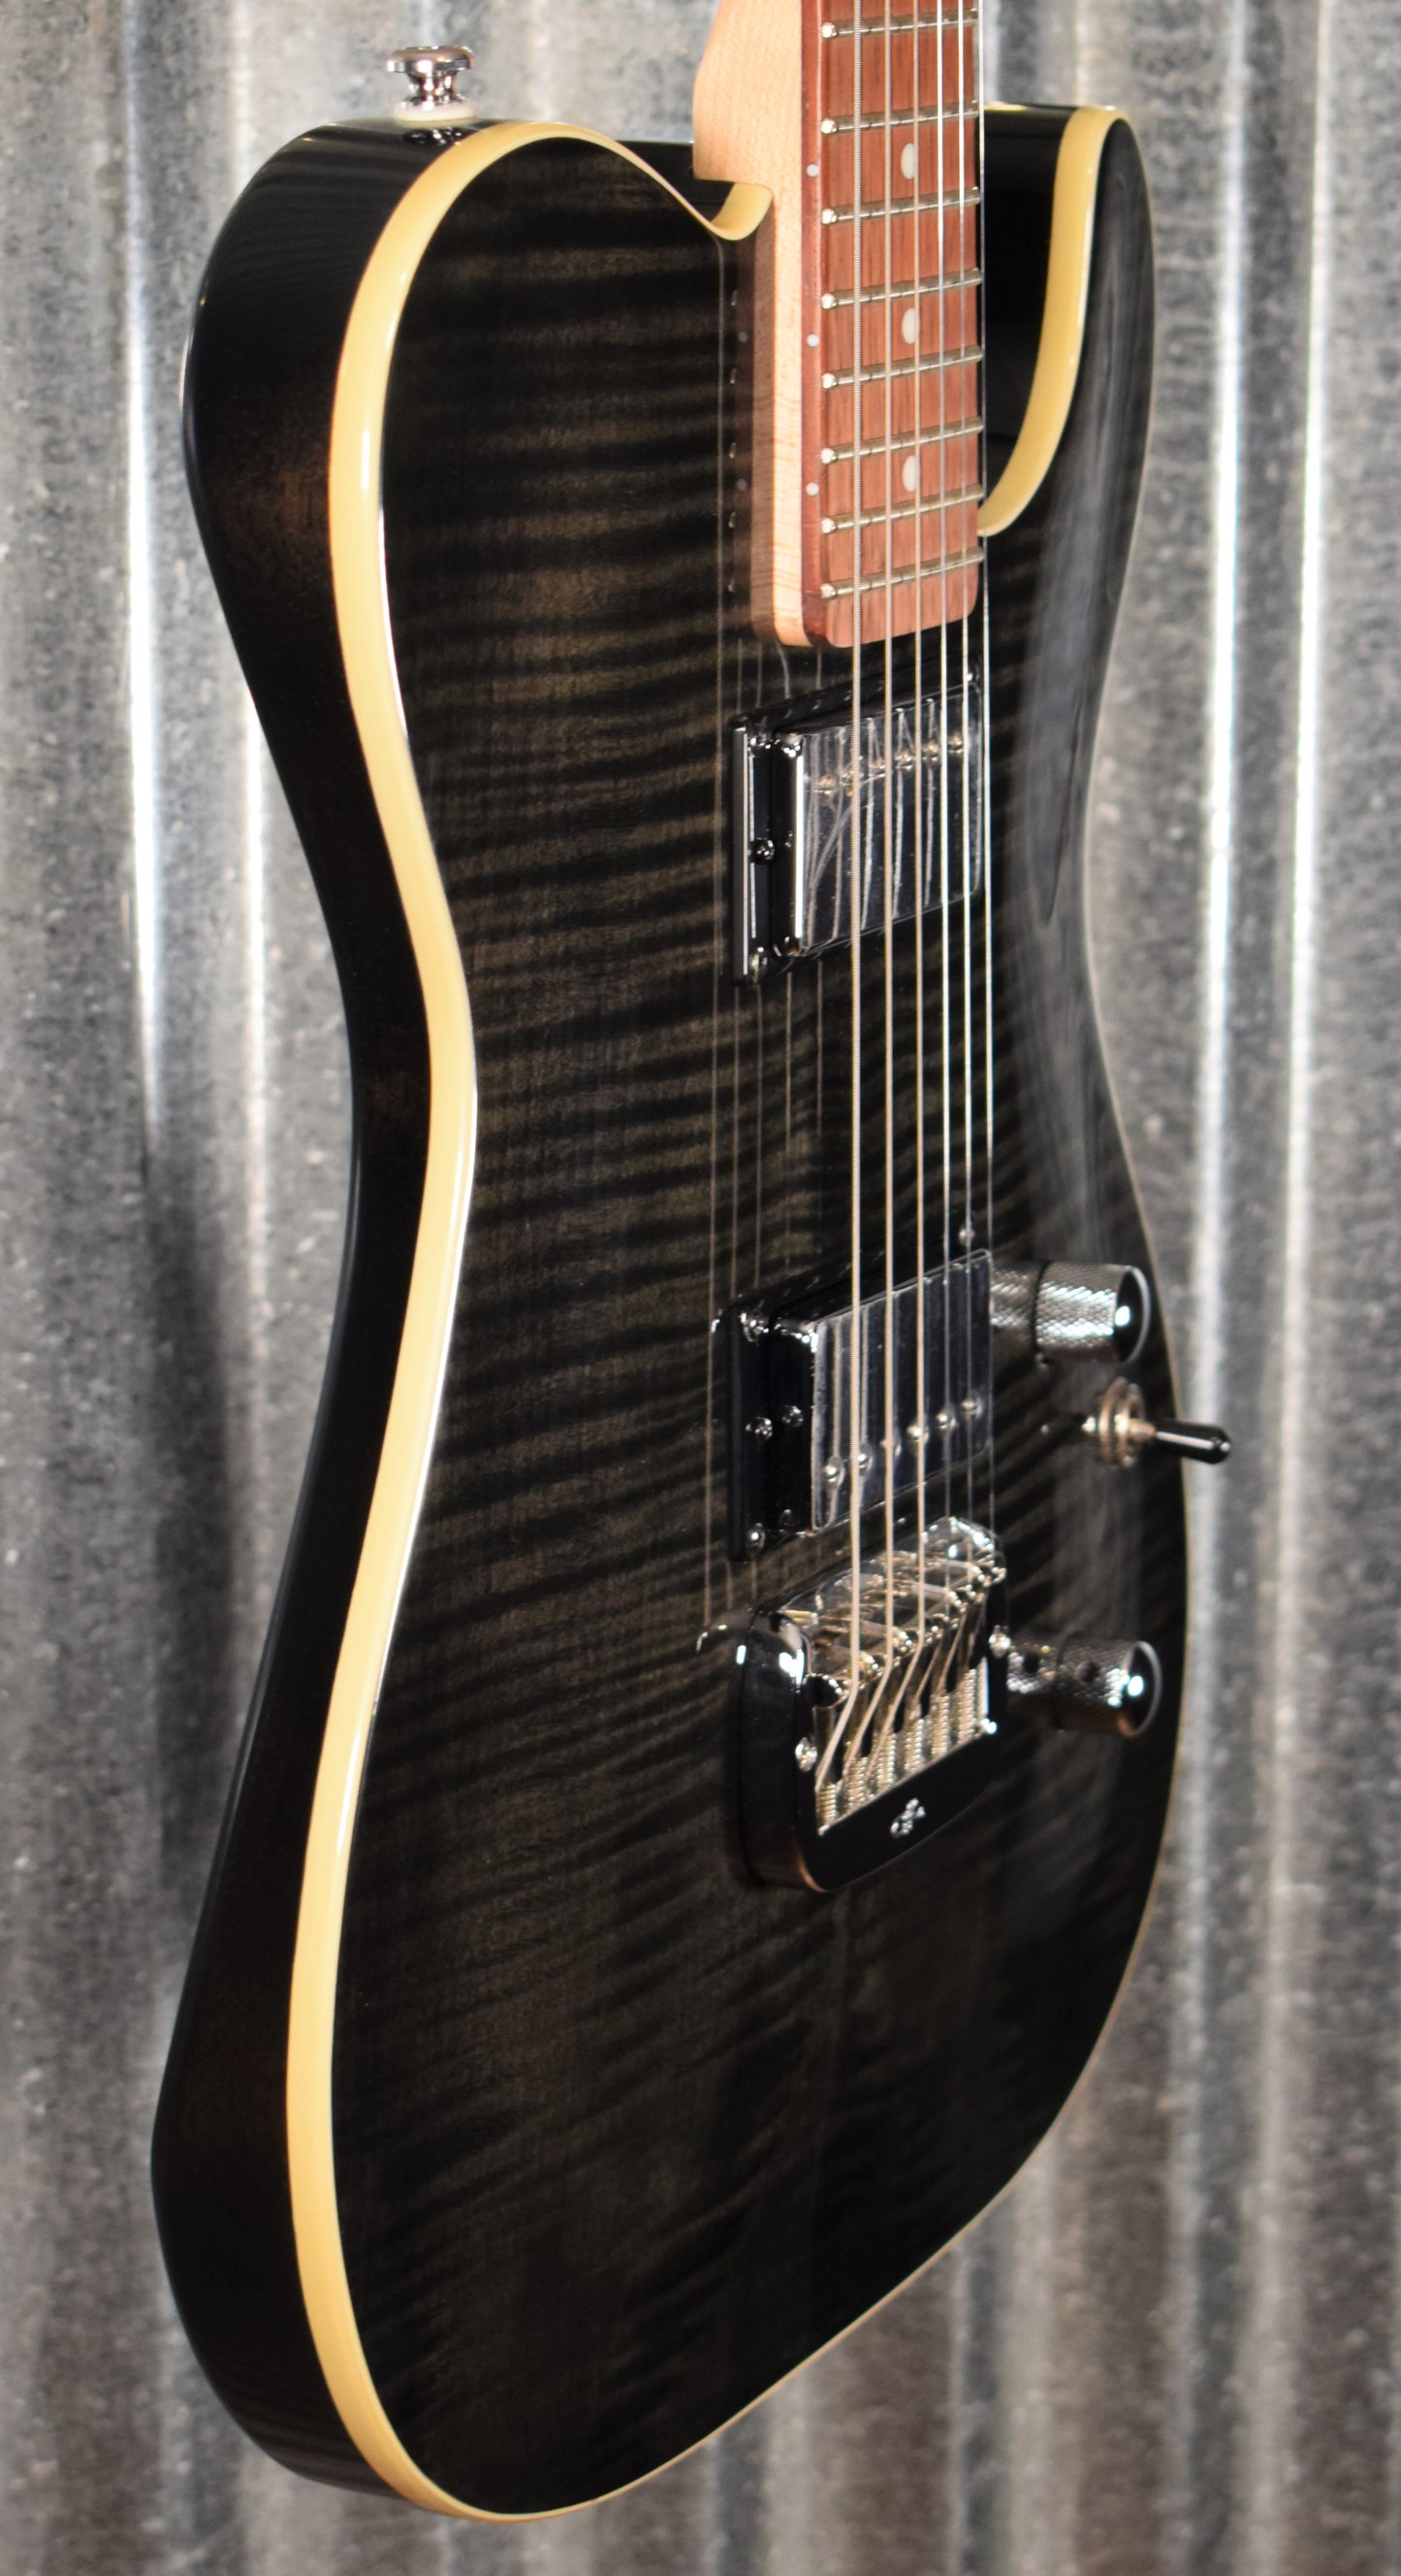 G&L Tribute ASAT Deluxe Carved Top Trans Black Guitar #4905 Demo